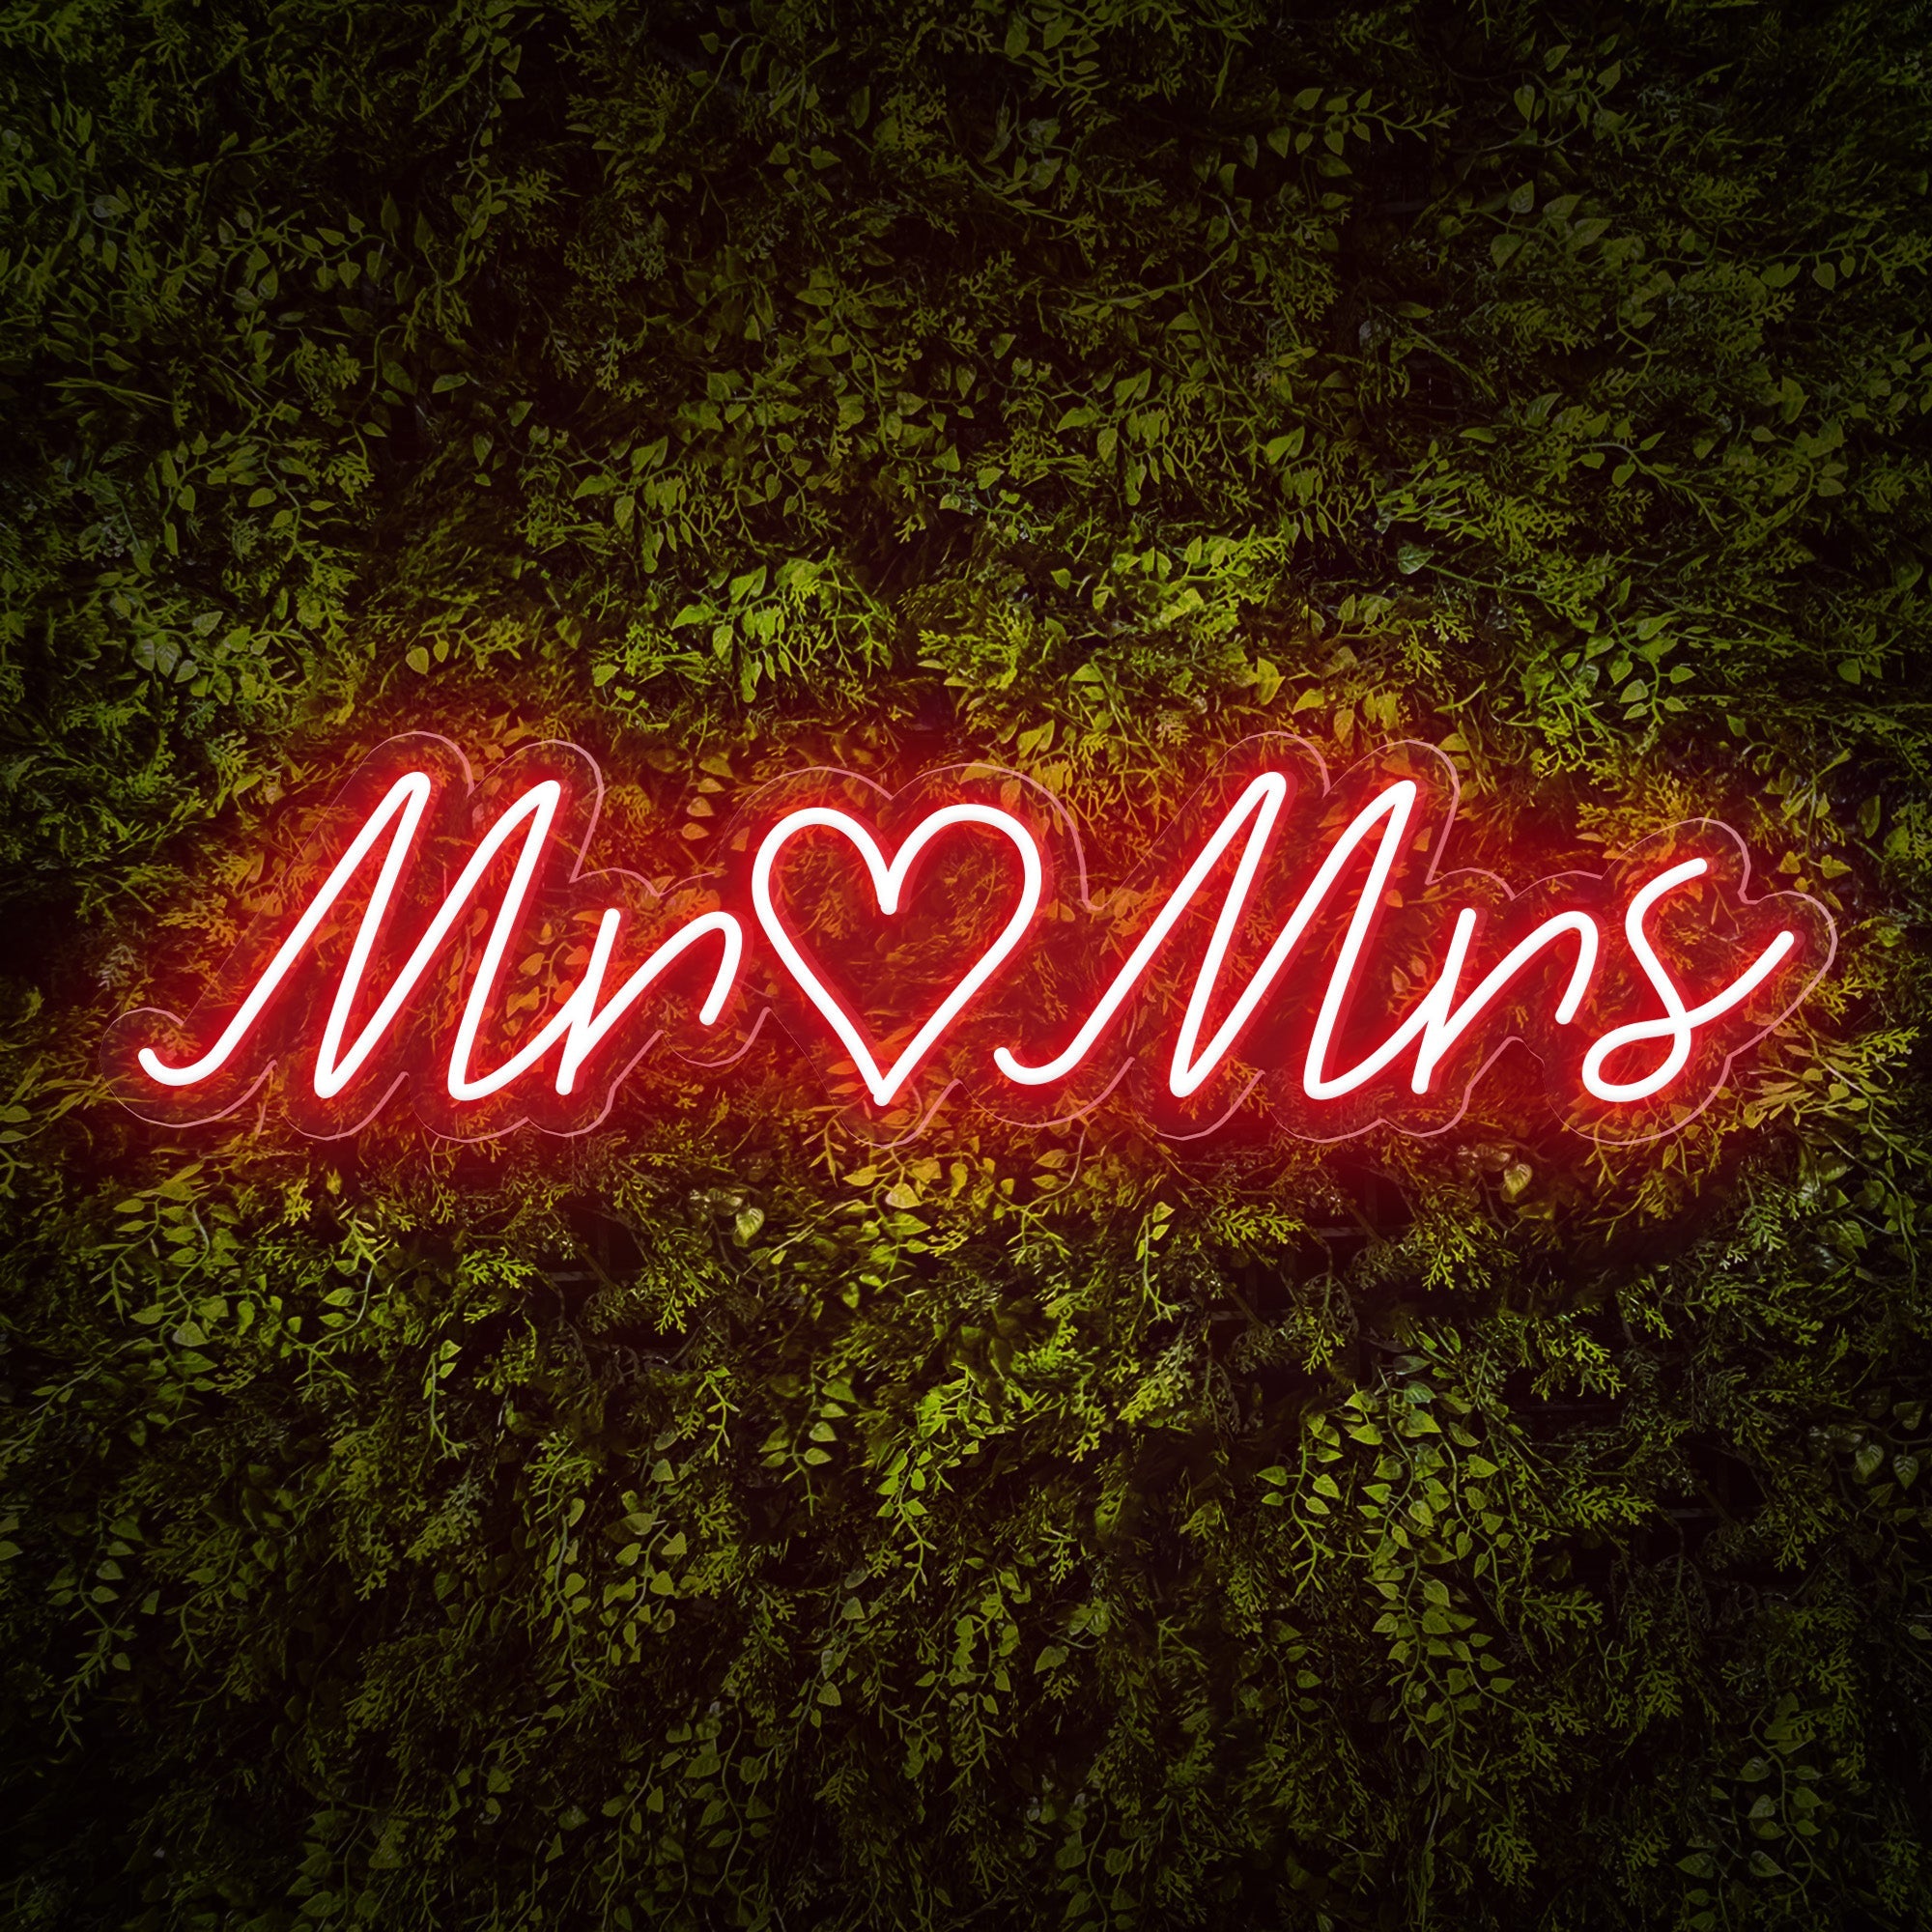 Mr & Mrs Words Heart Neon Sign